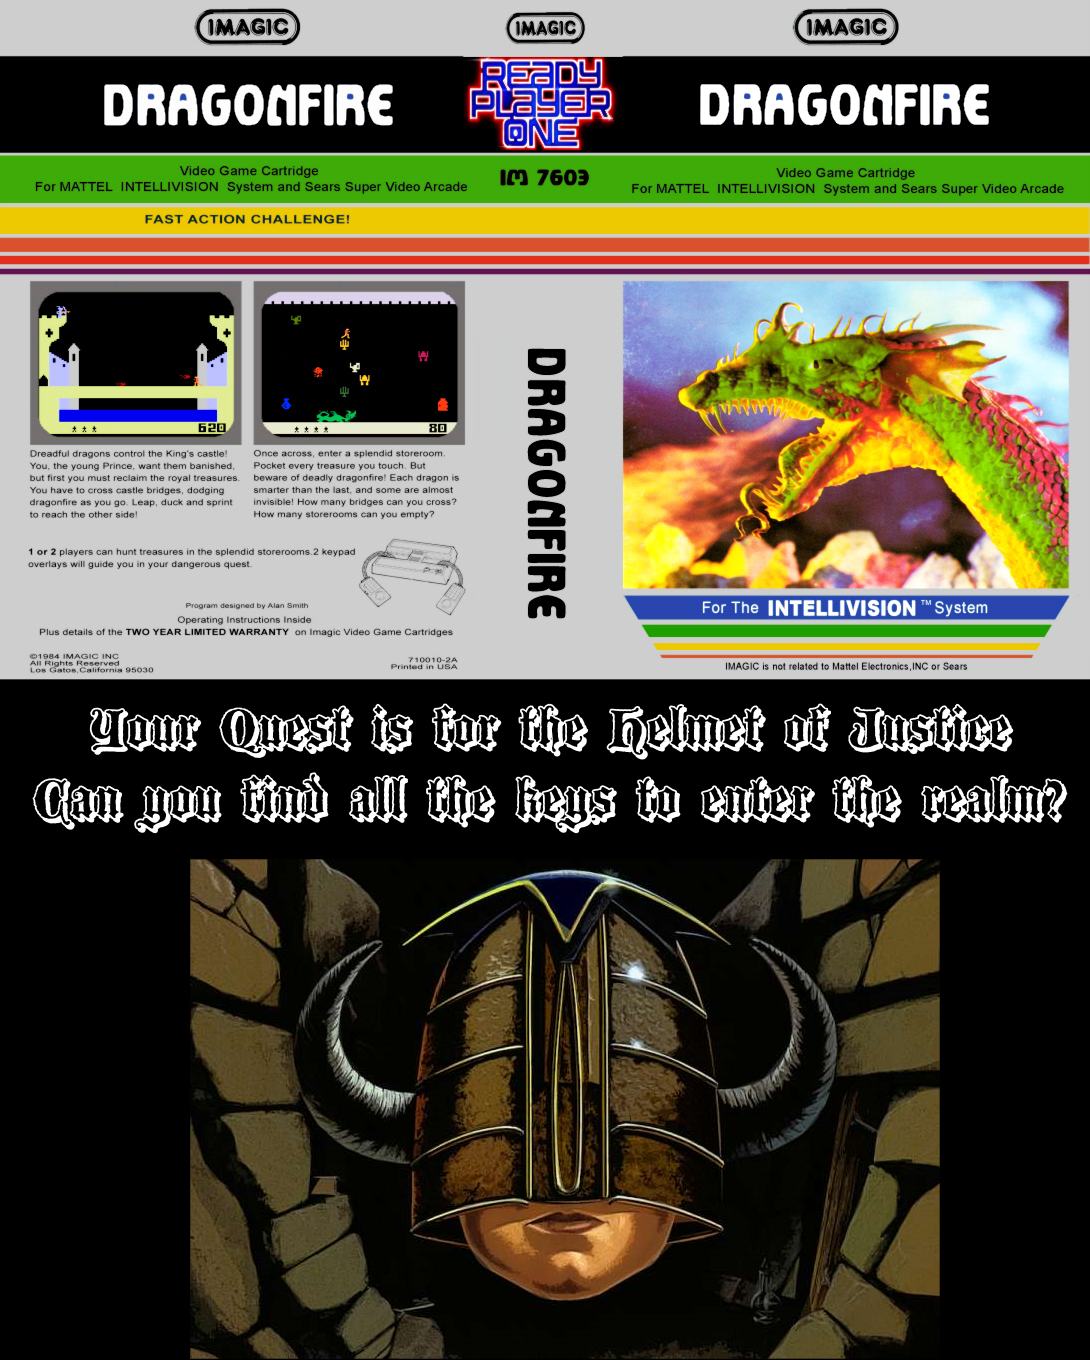 Dragonfire, Atari Jogos online